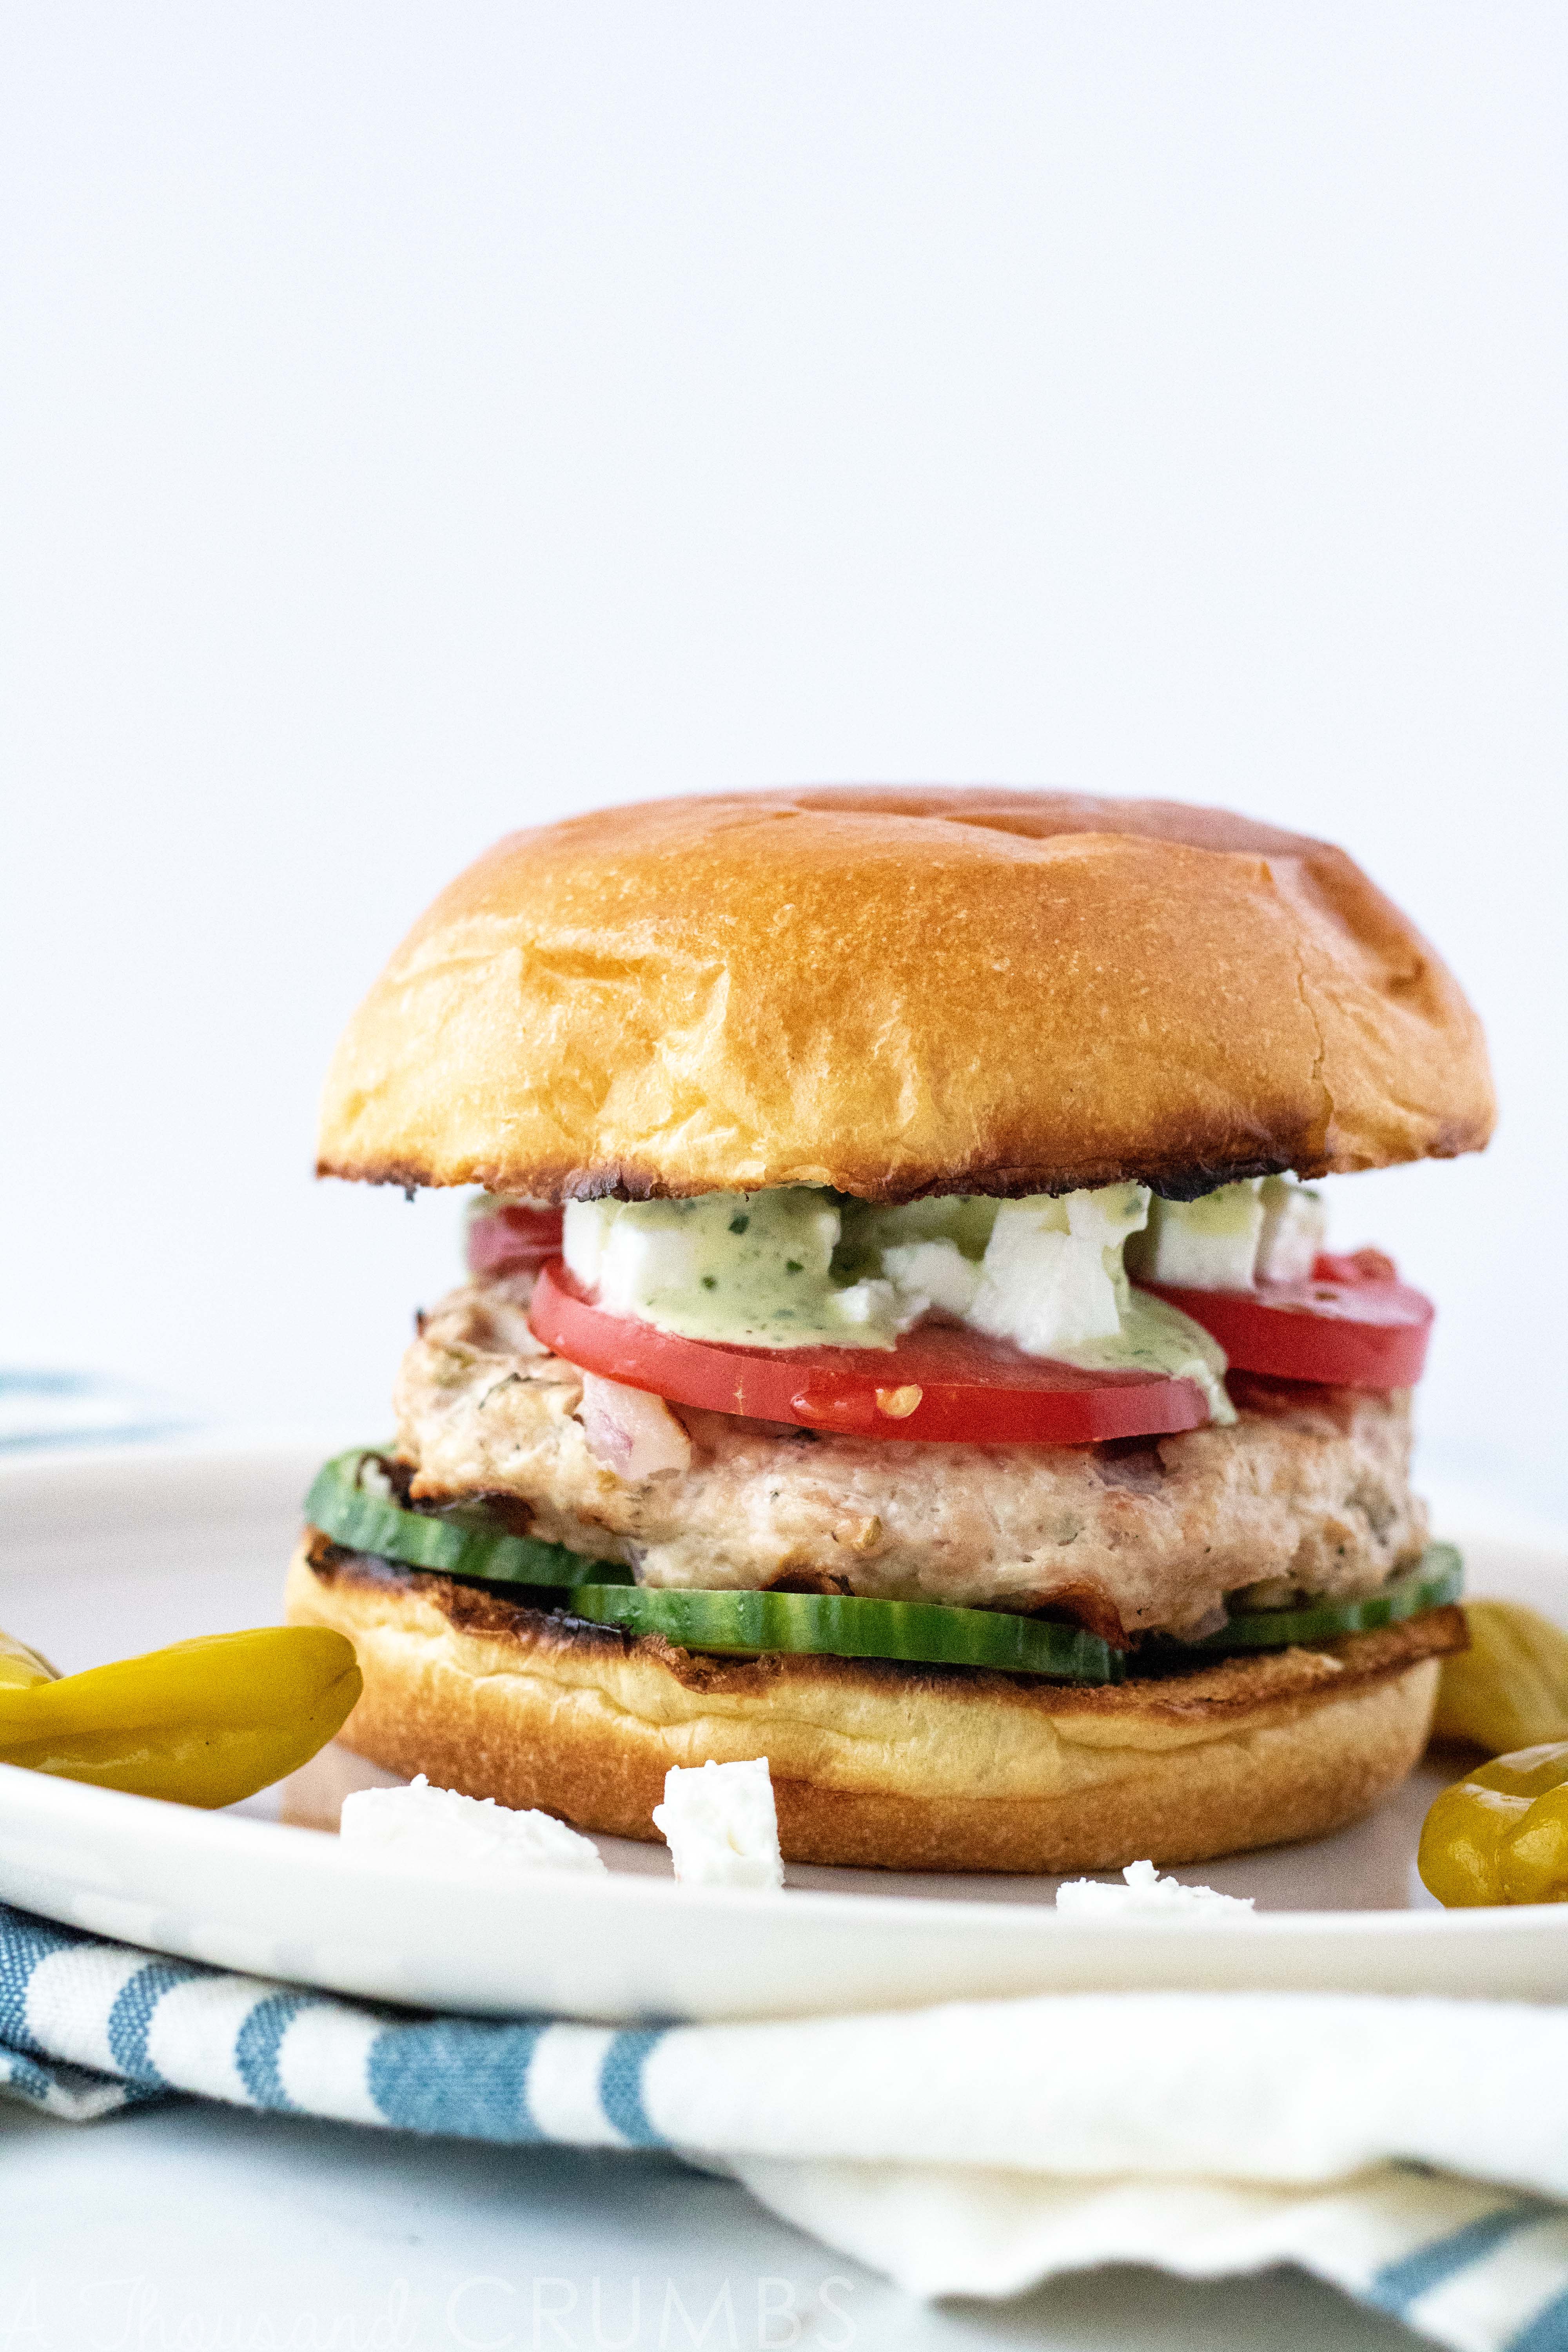 Greek Chicken Burgers full of flavor, and so easy to make! #athousandcrumbs #greekfood #chickenburgers #healthydinner #dinnerrecipe #burgerrecipe